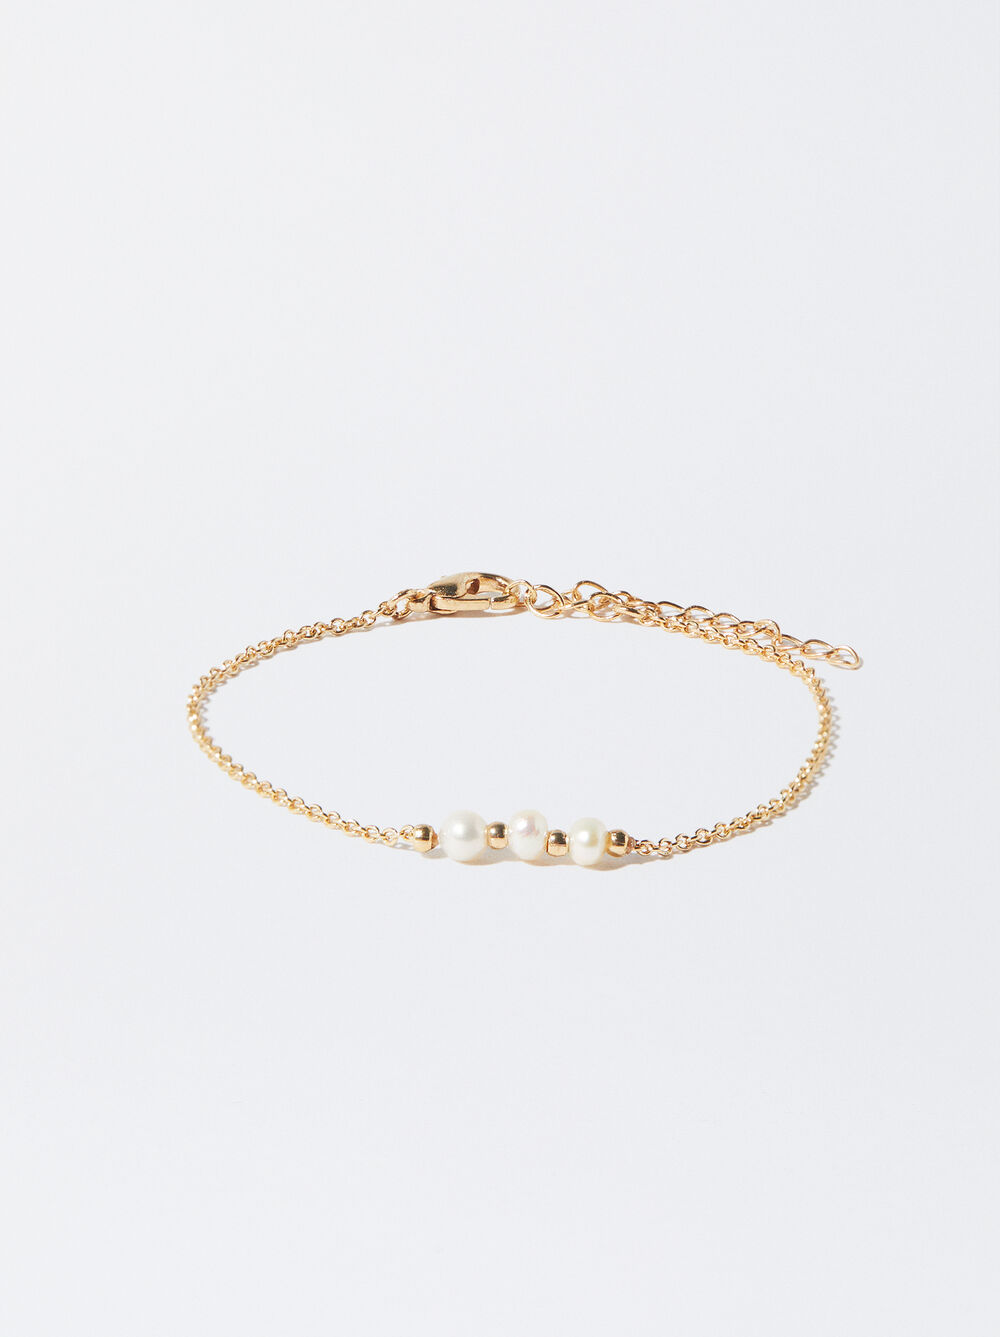 Goldenes Armband Mit Perlen